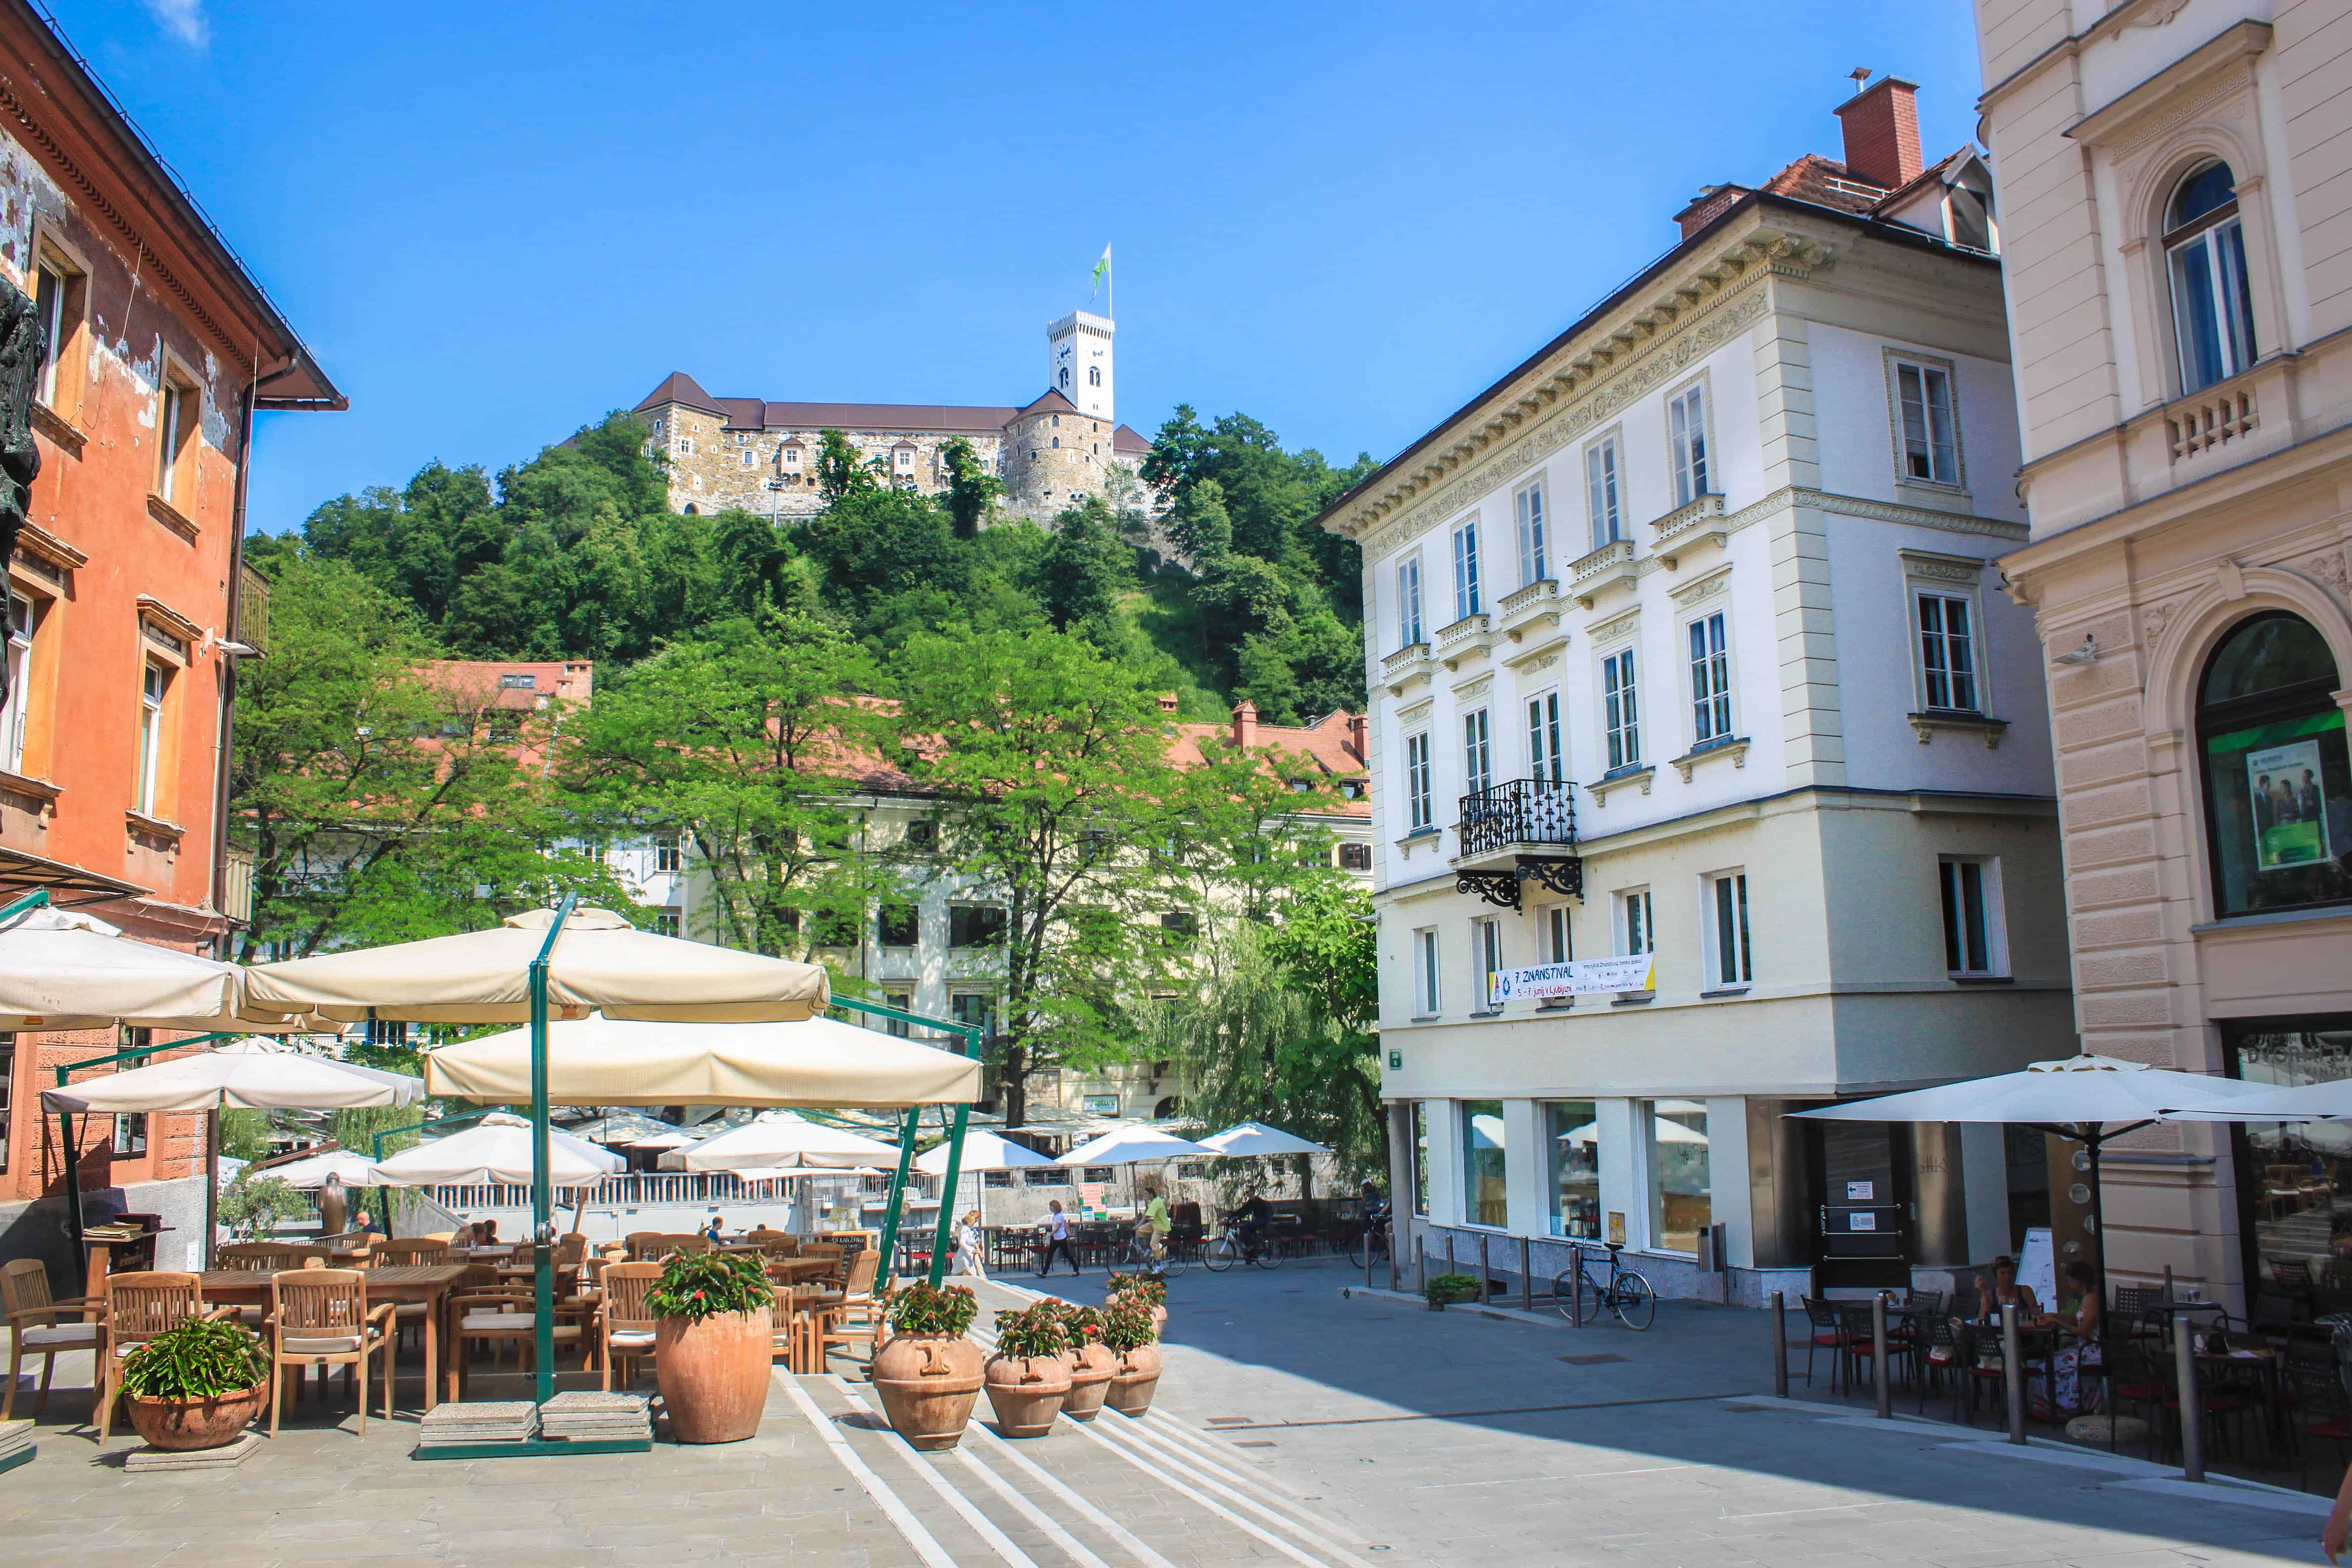 must visit cities in slovenia